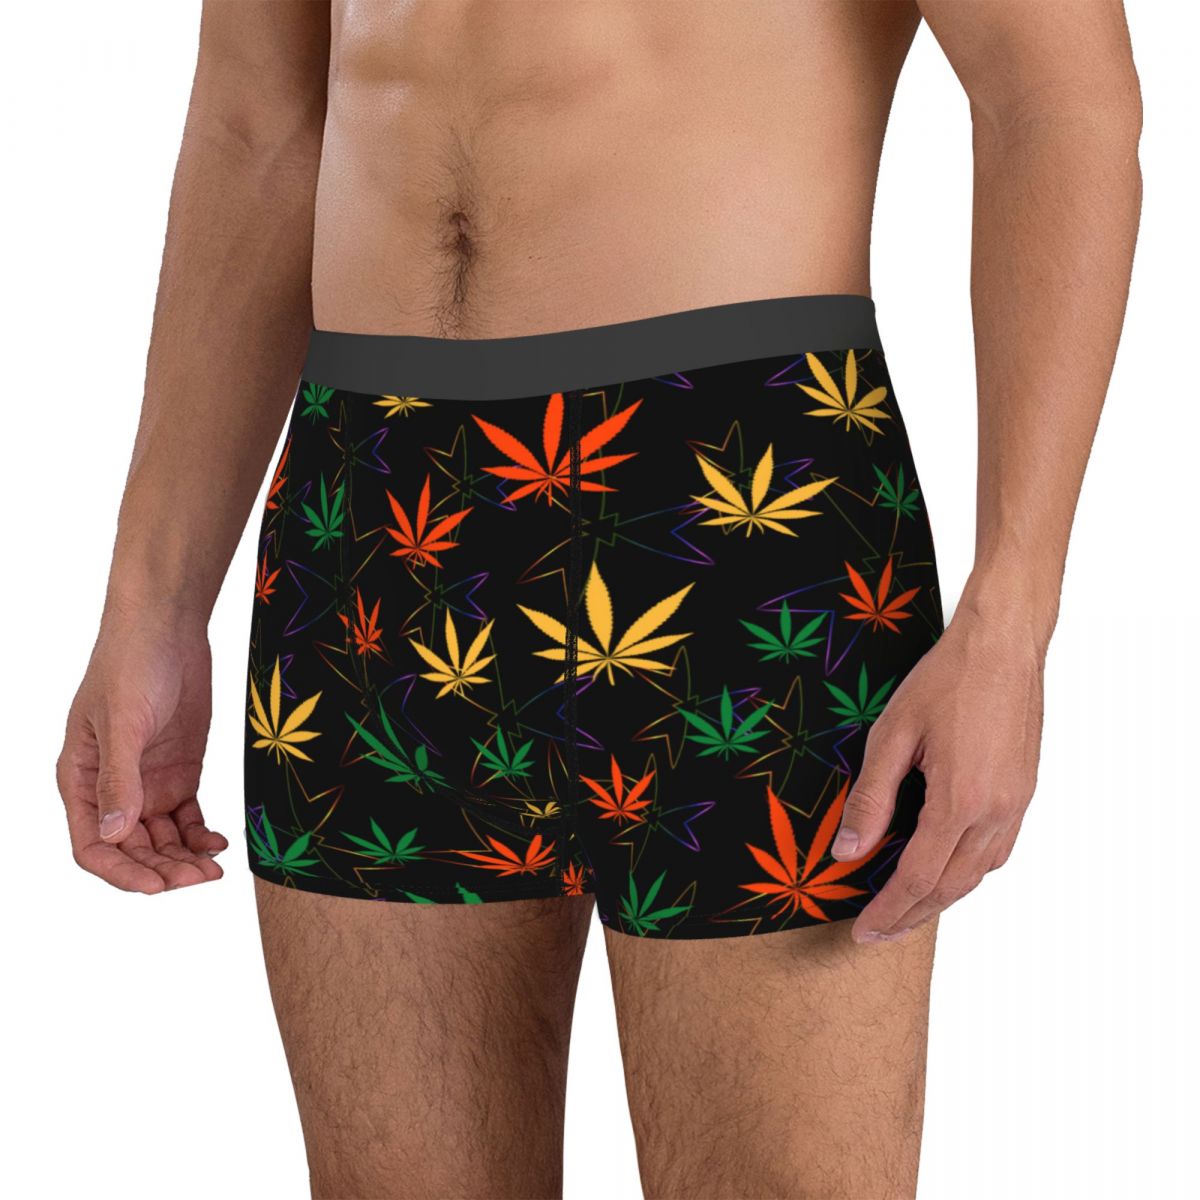 Colorful Cannabis Leaf Men's Underwear